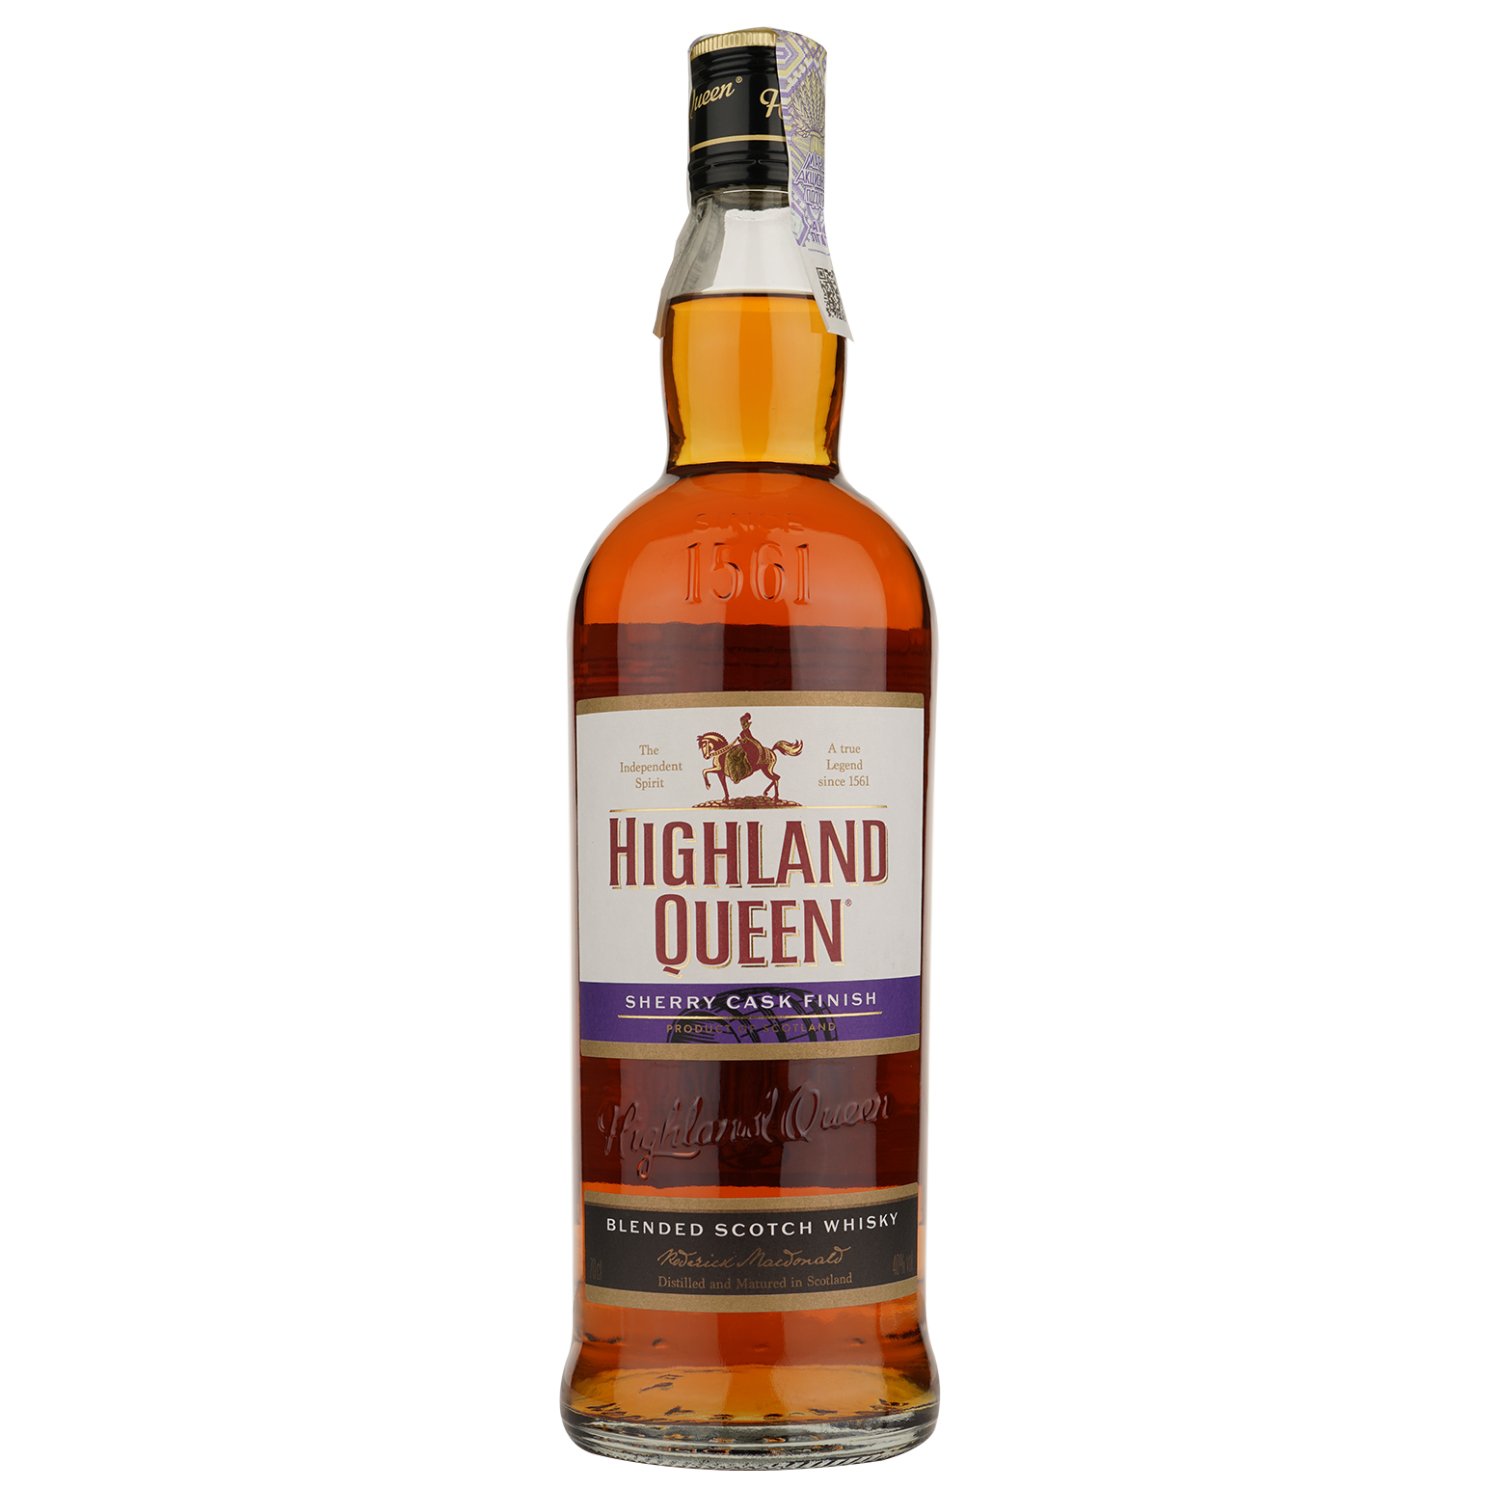 Віскі Highland Queen Sherry Cask Finish Blended Scotch Whisky, 40%, 0,7 л - фото 1